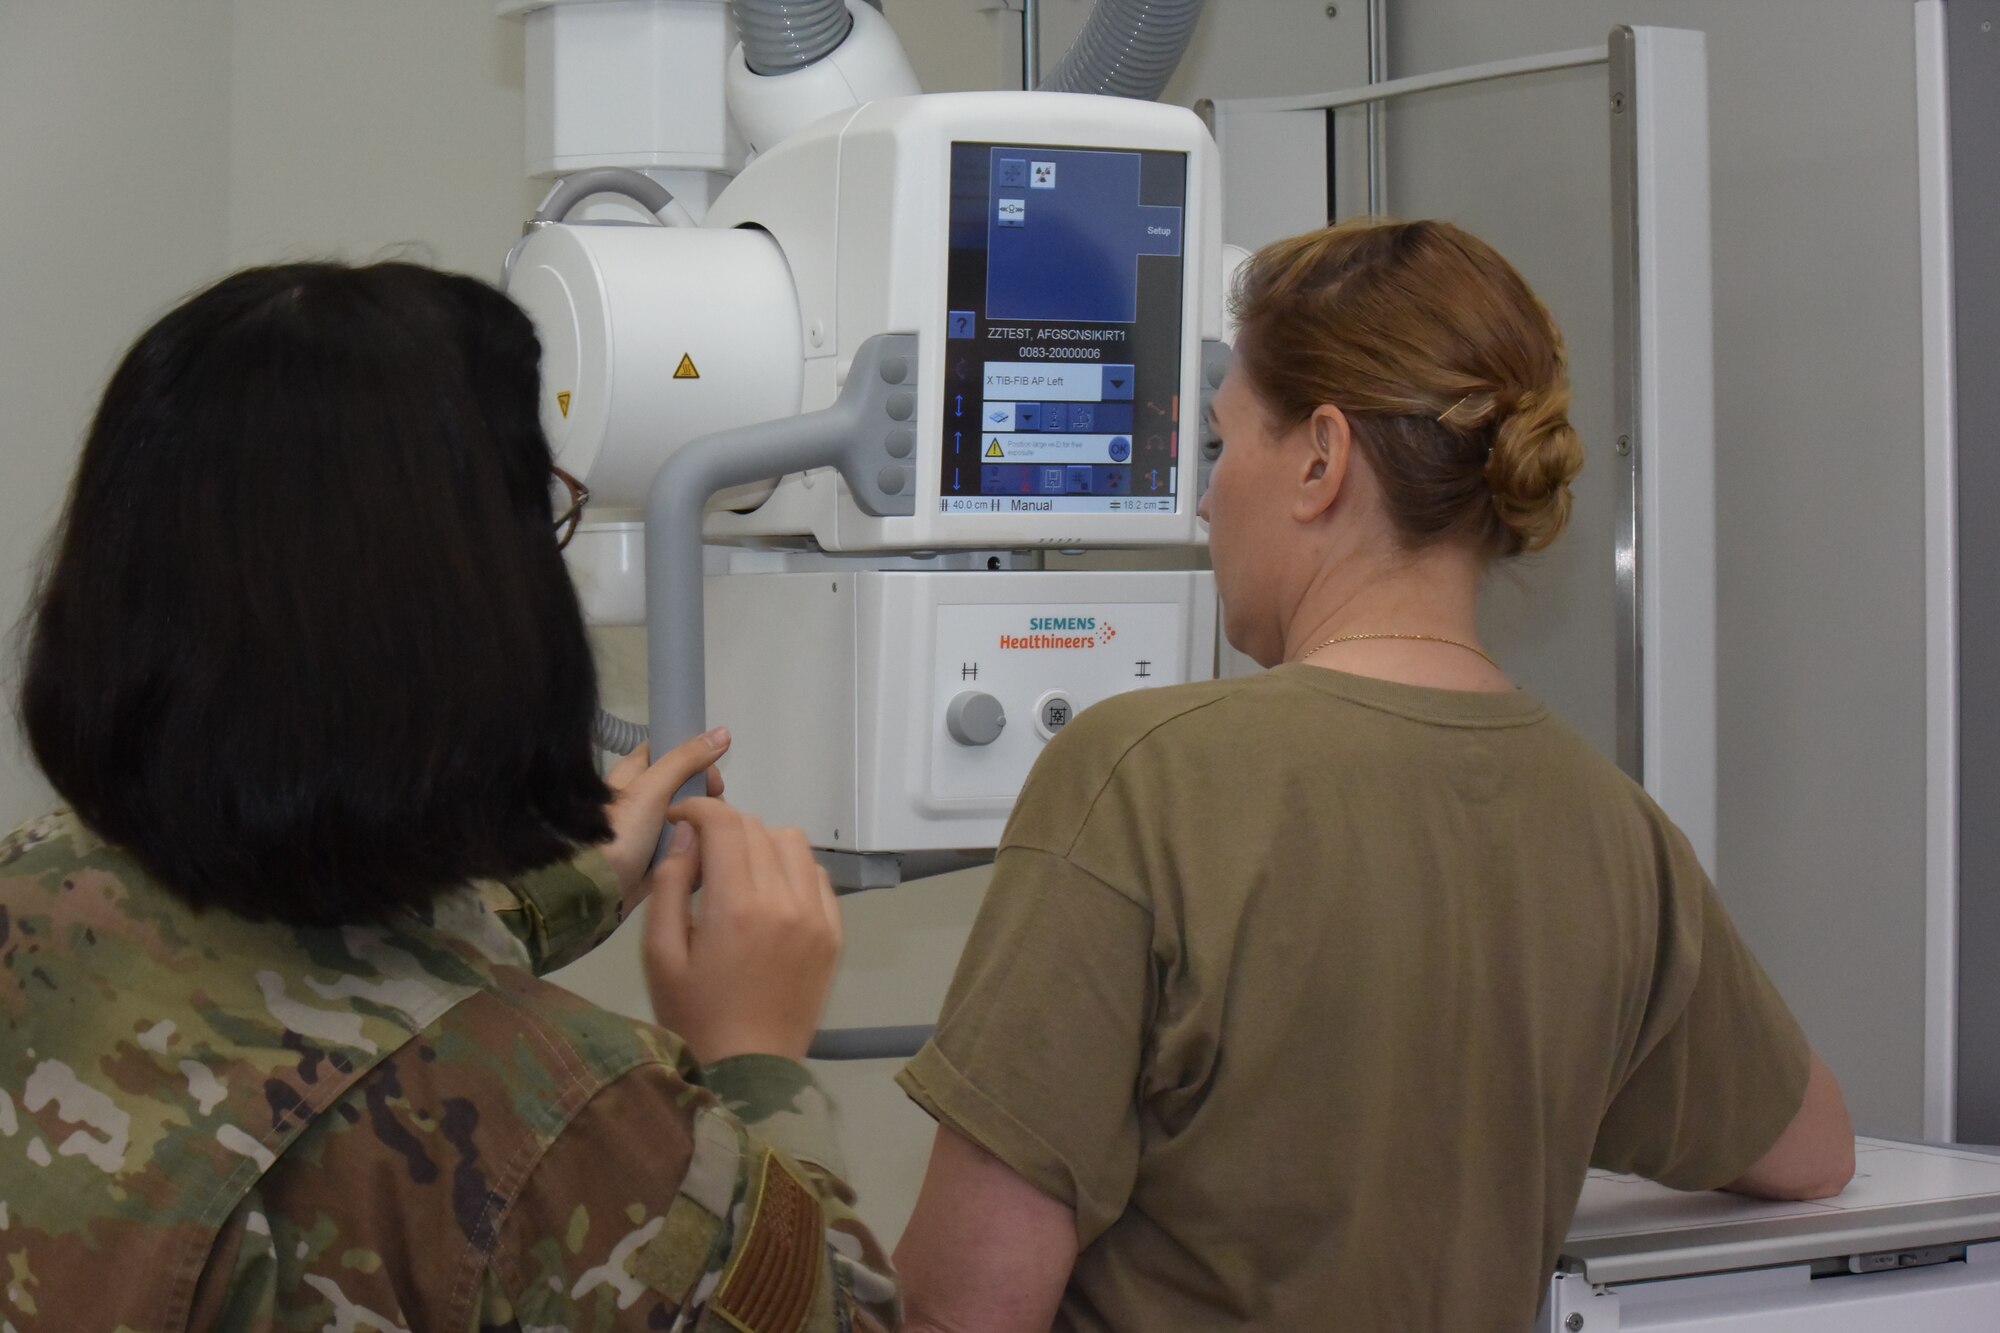 two women next to an x-ray machine